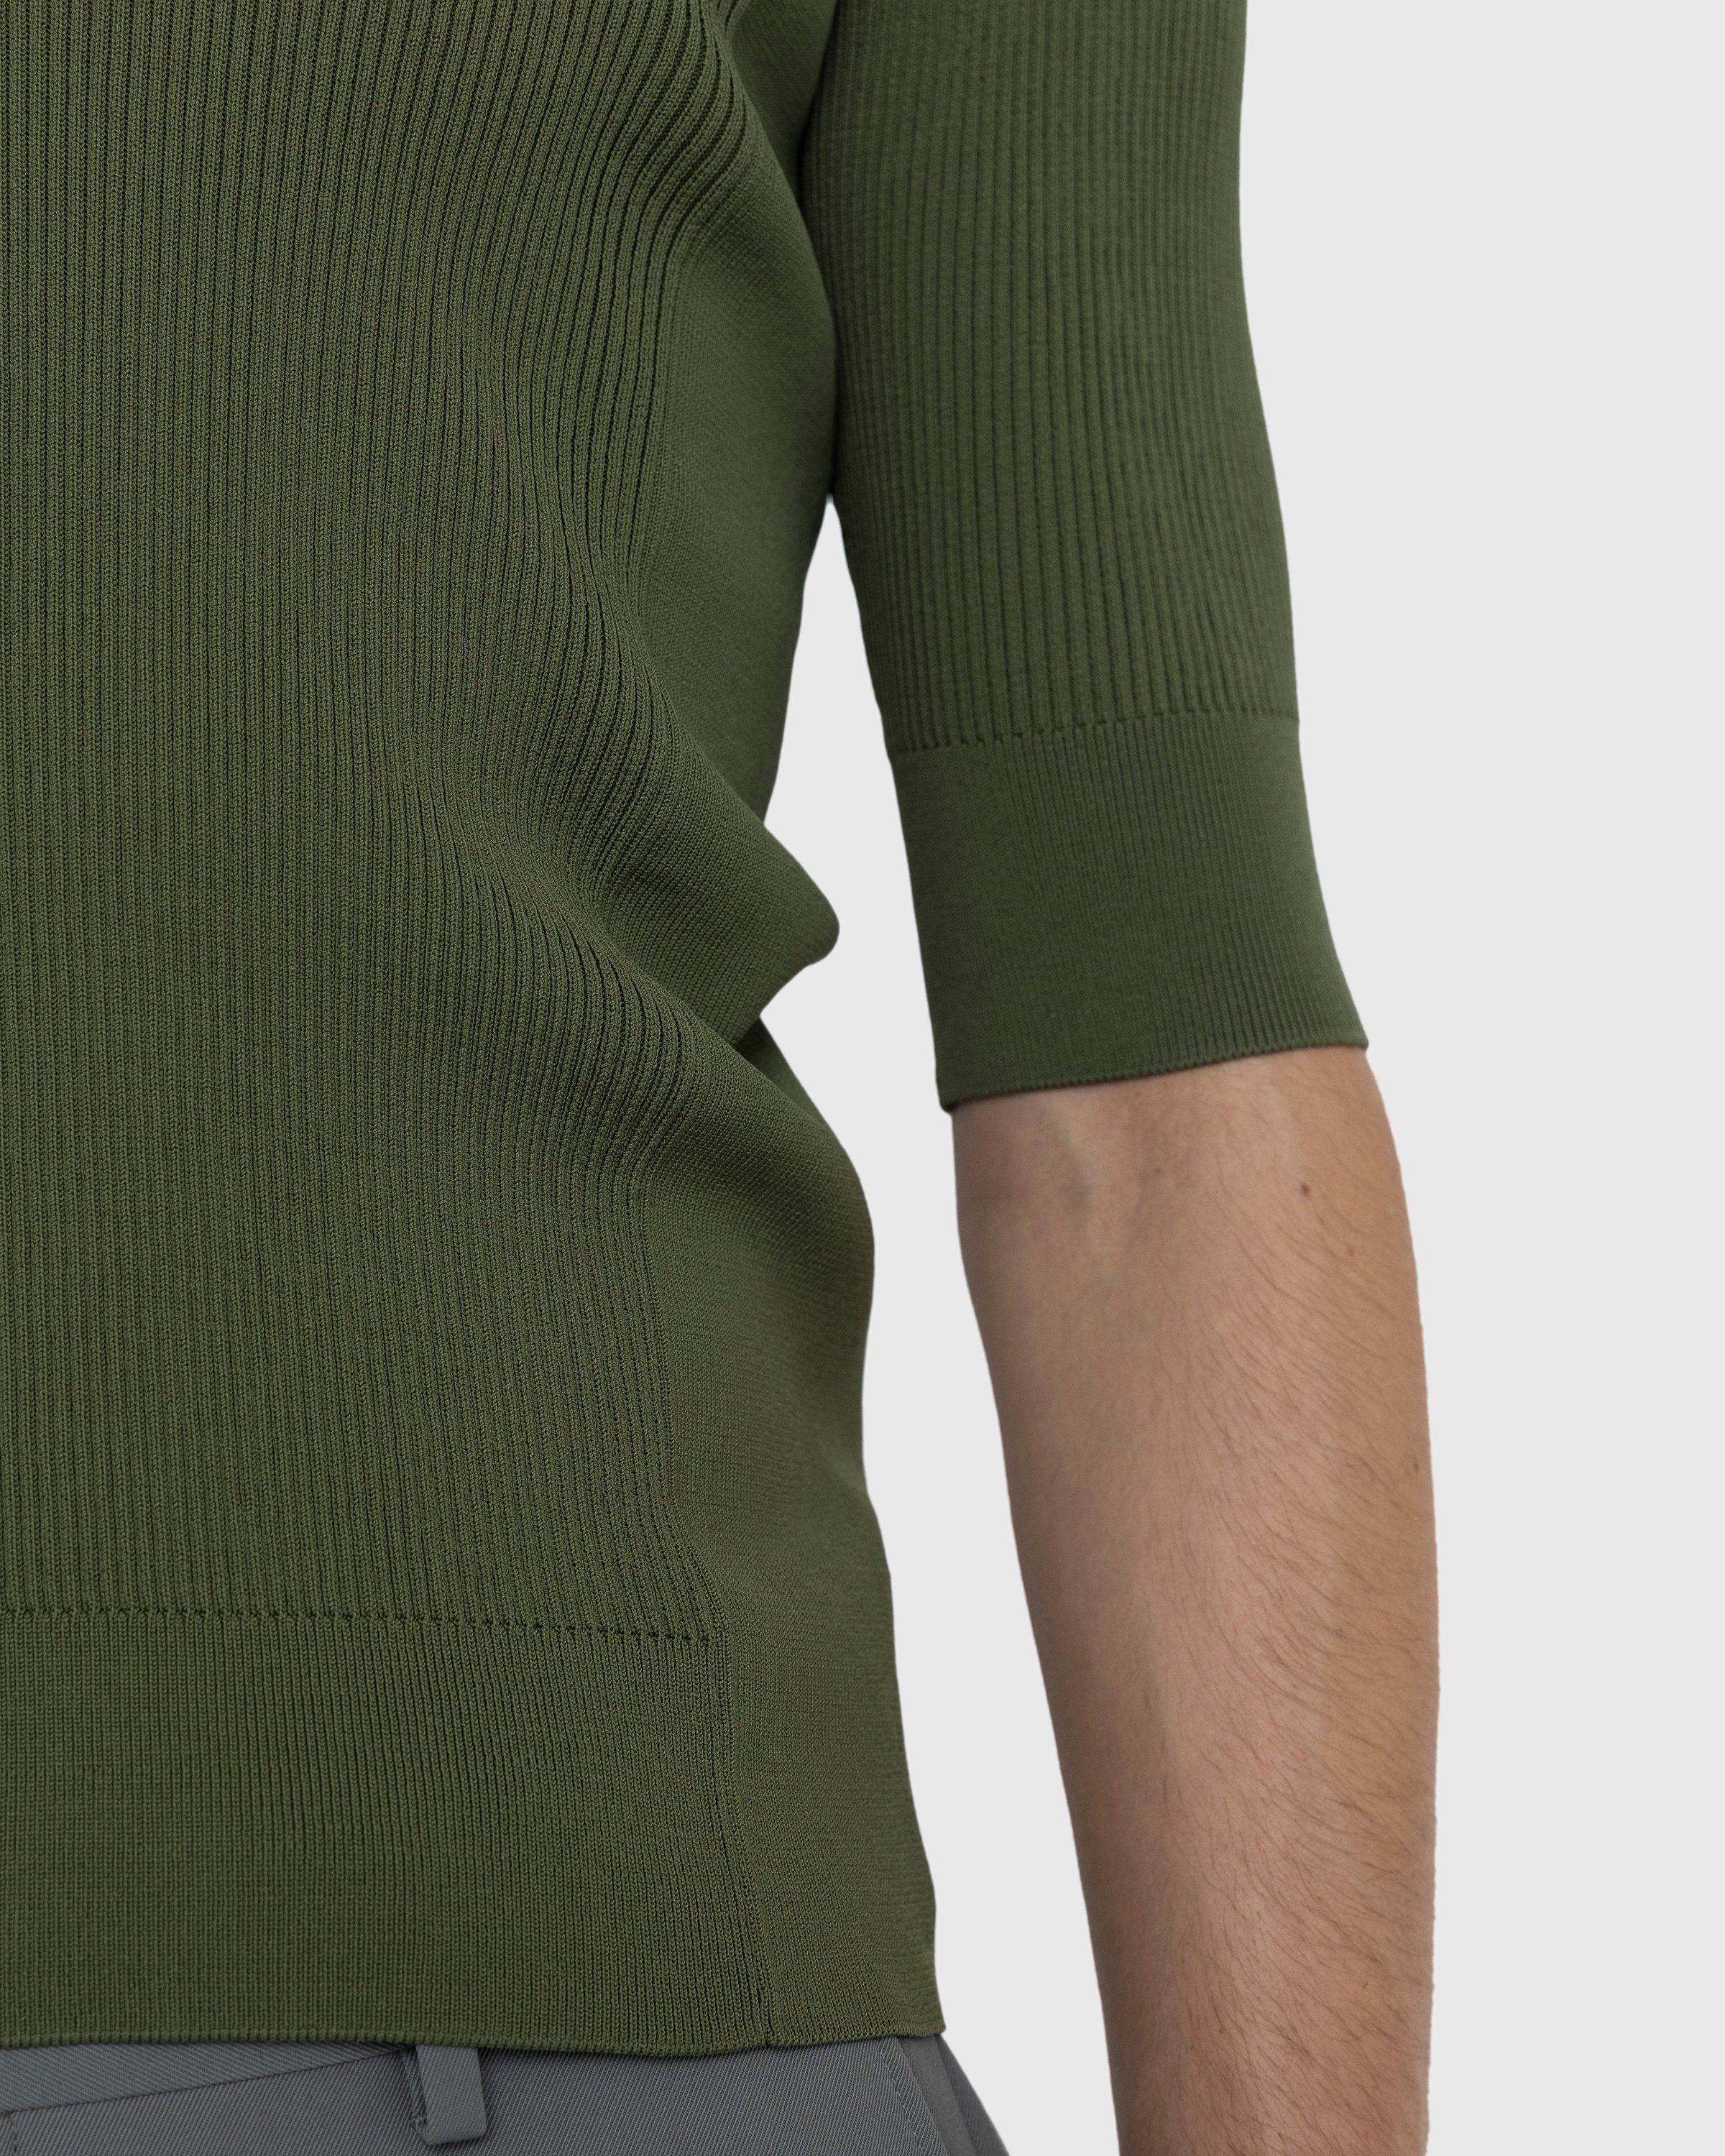 Dries van Noten - Neil Sweater - Clothing - Green - Image 6